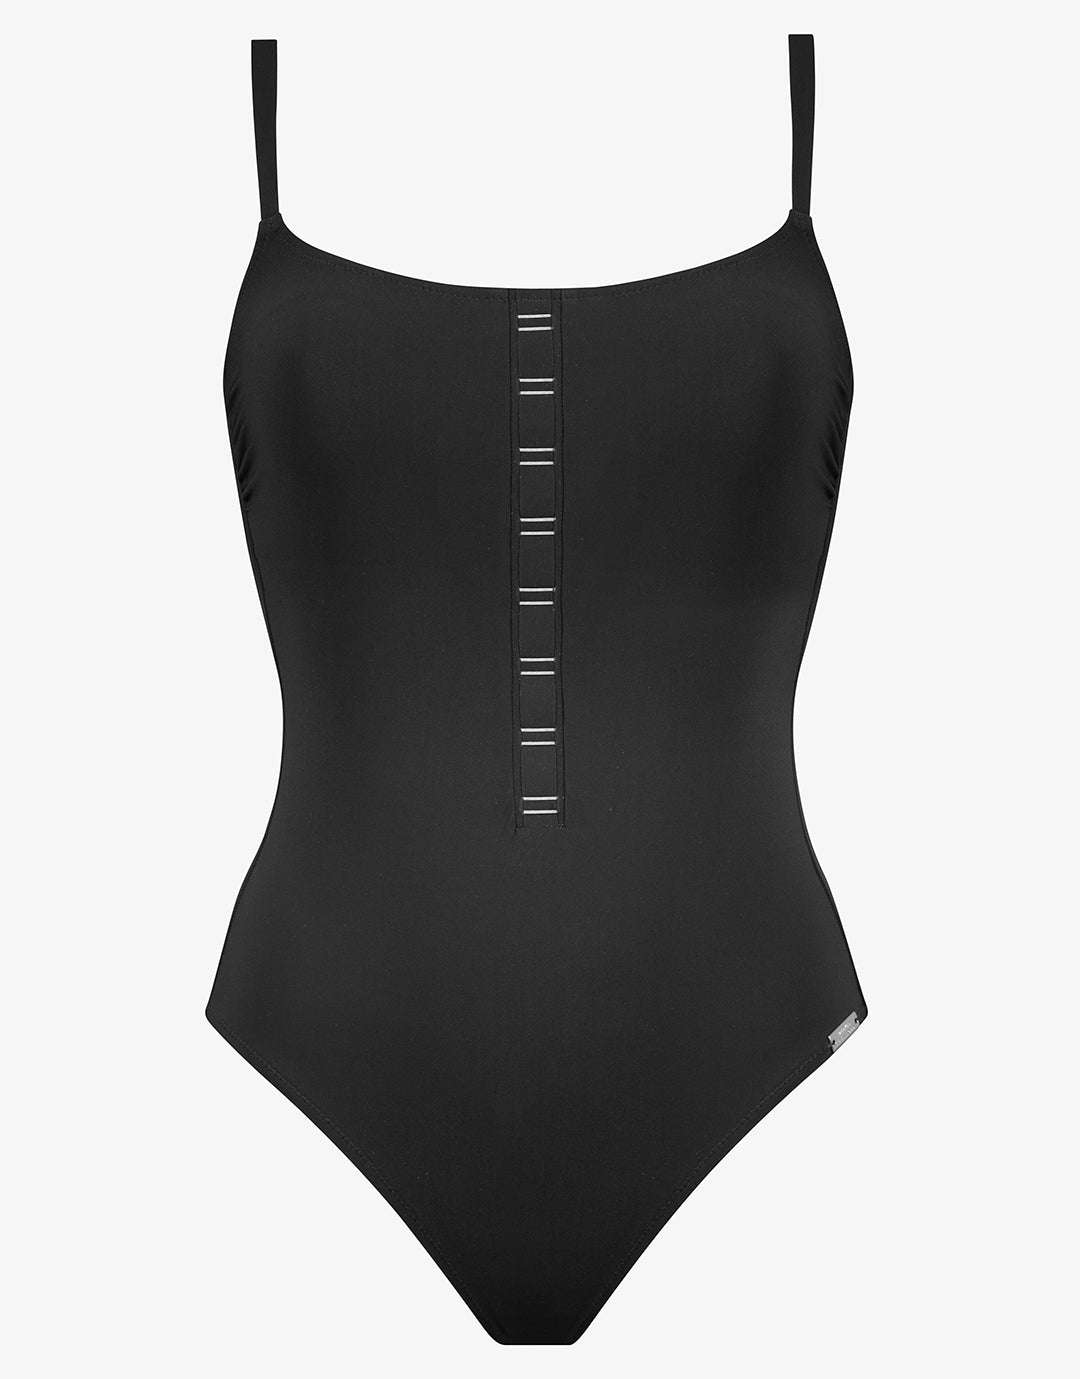 Code Tank Swimsuit - Black - Simply Beach UK